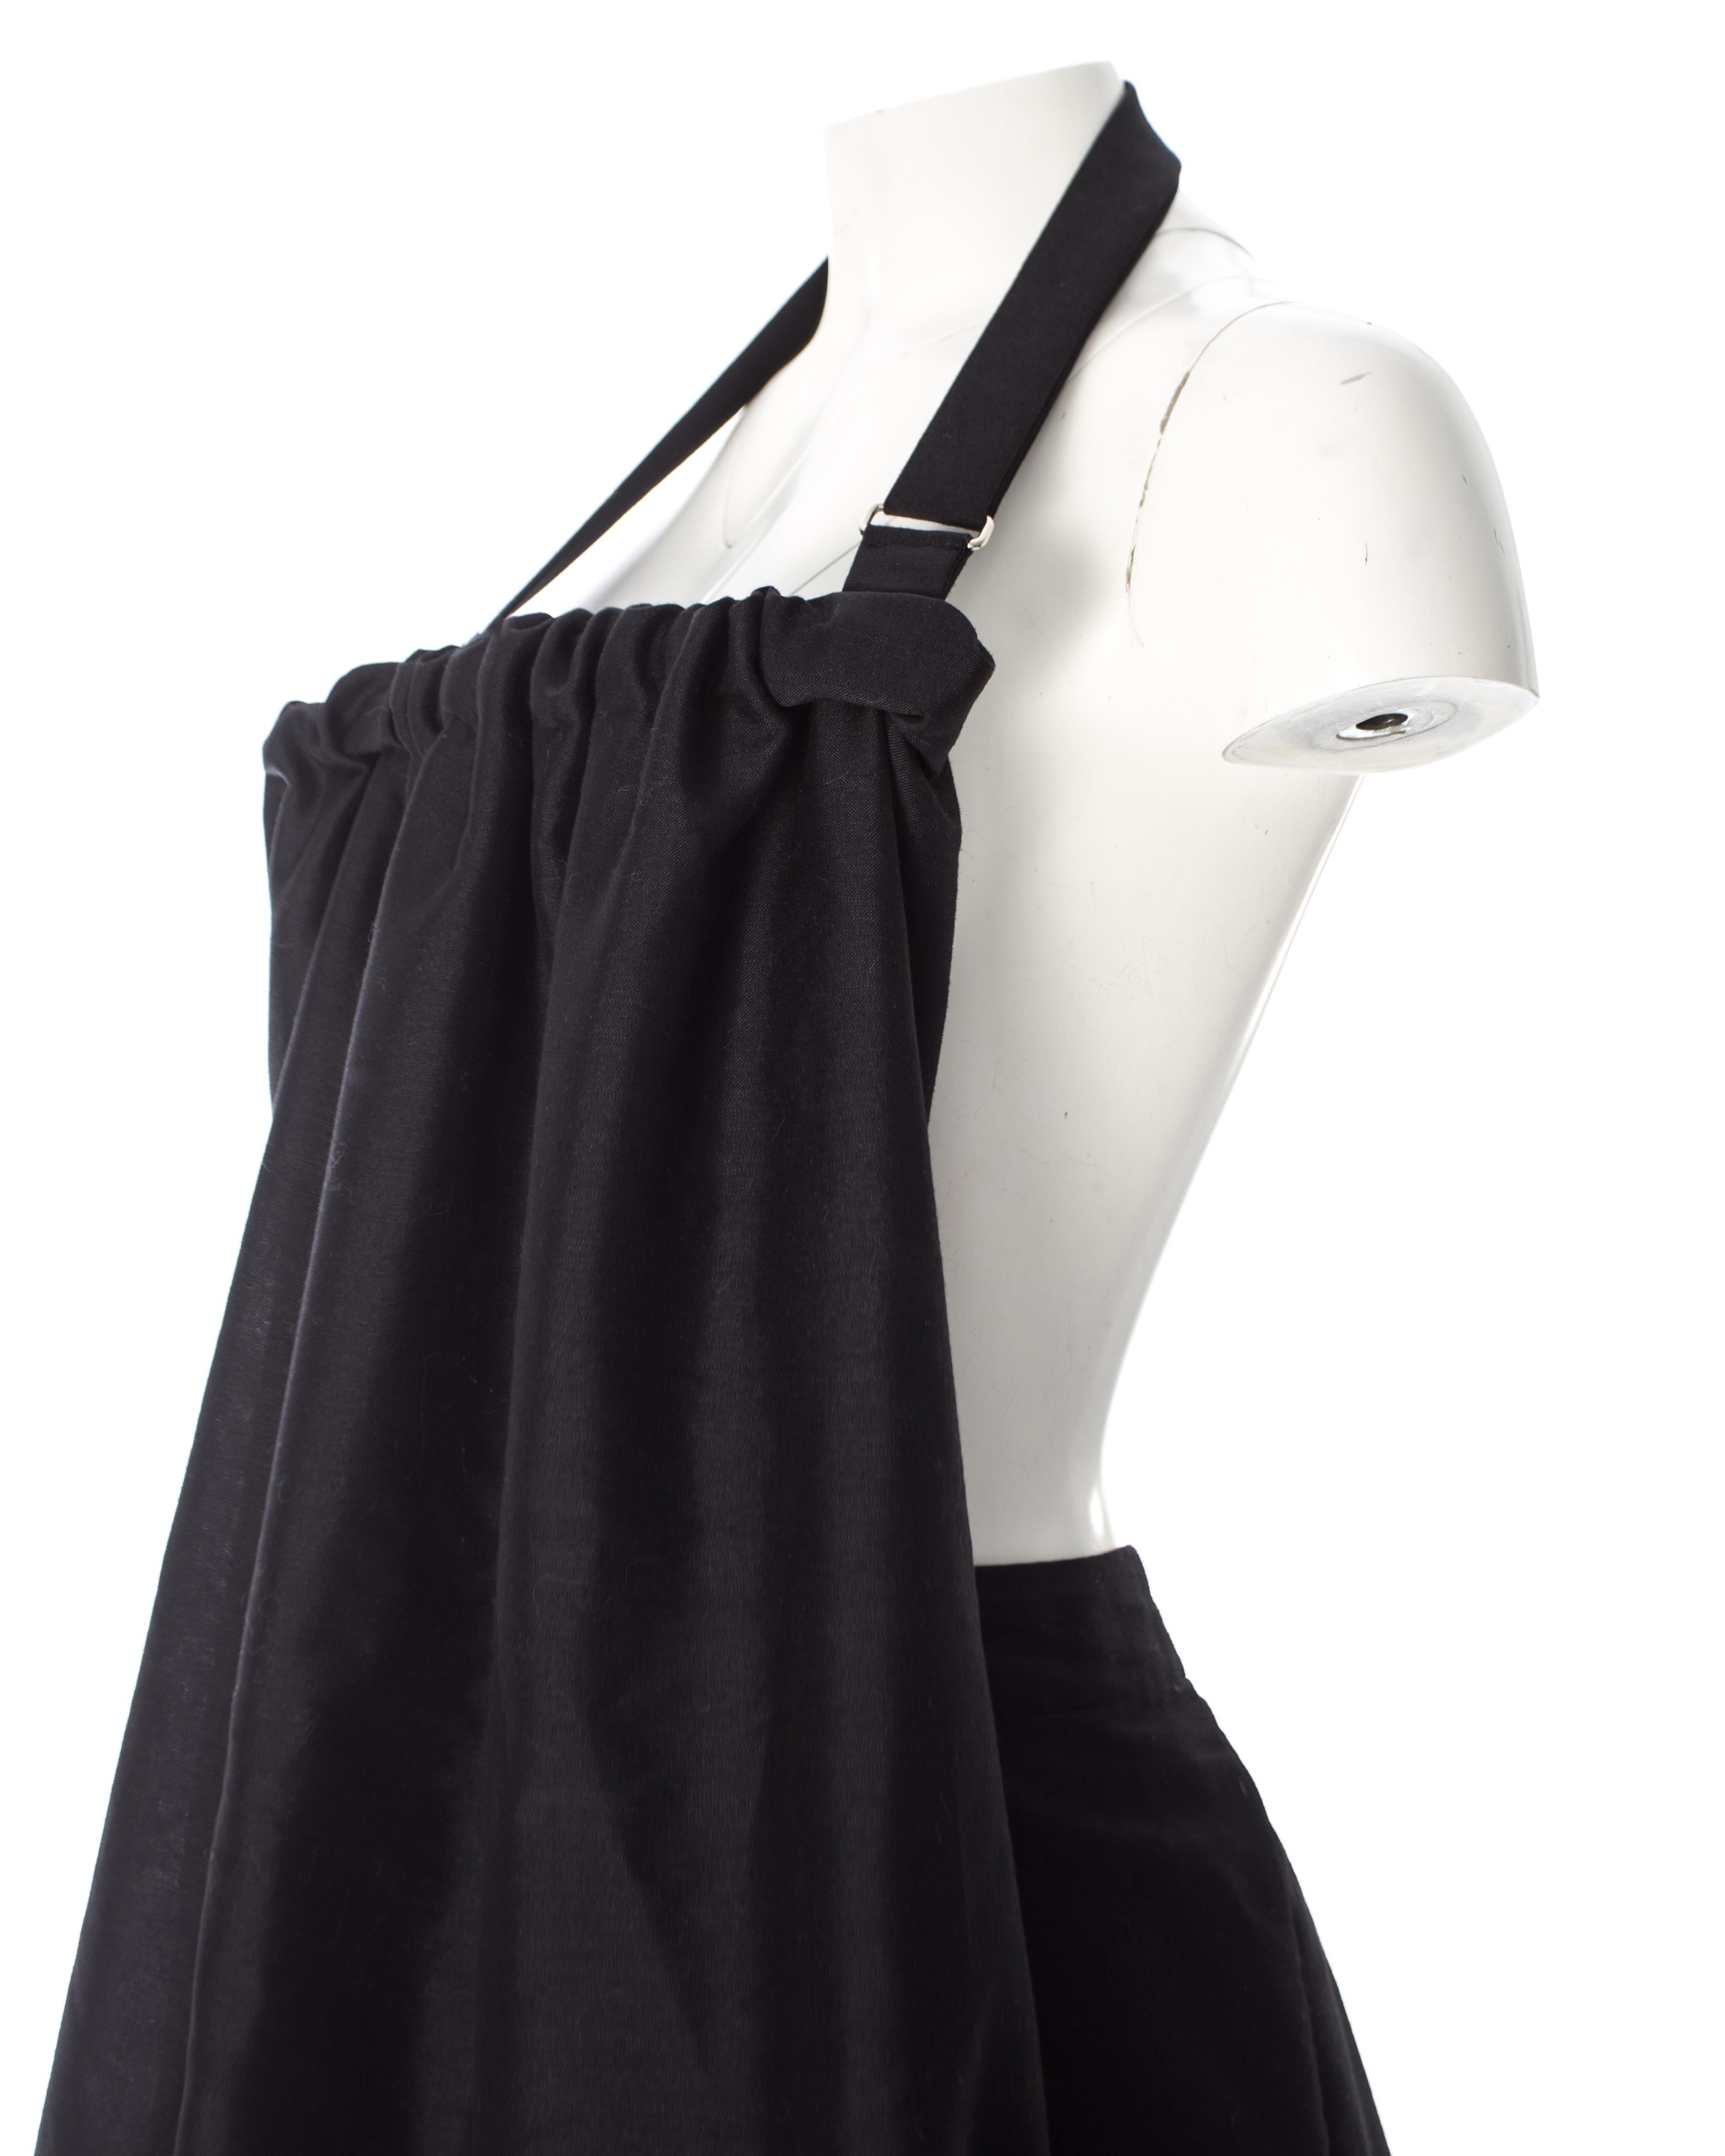 Black Yohji Yamamoto black convertible dress / skirt / bag combination, S / S 2001